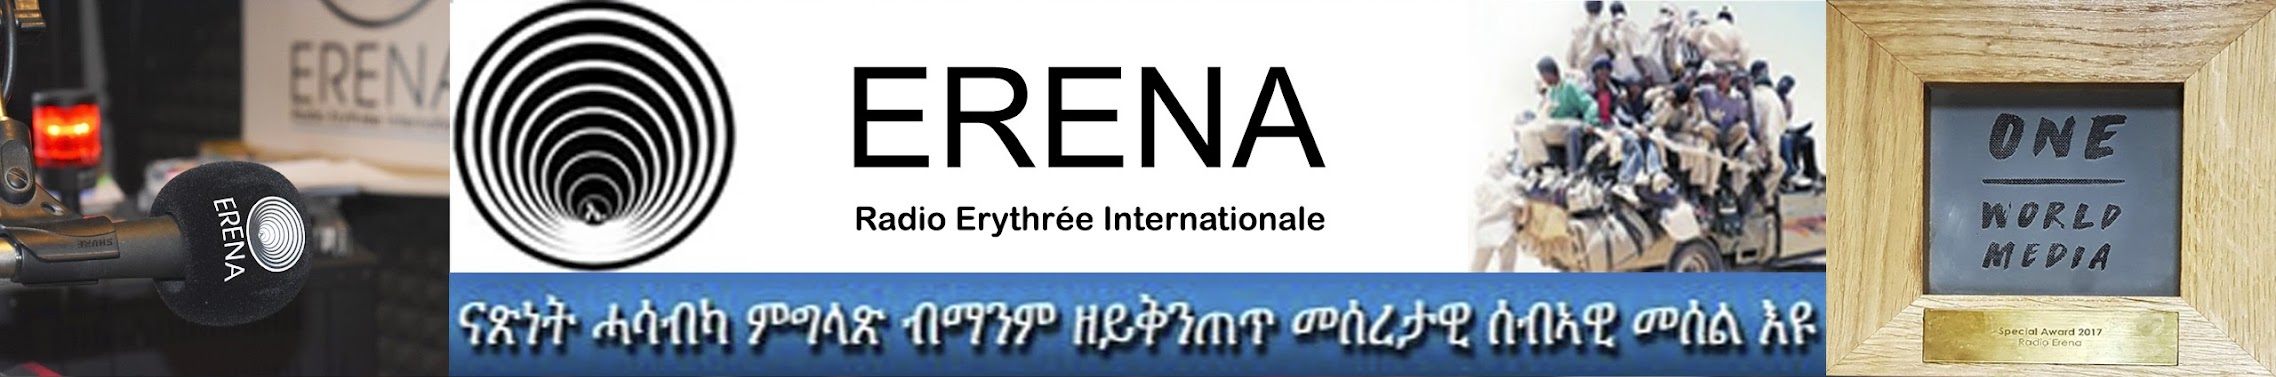 Radio Erena - YouTube